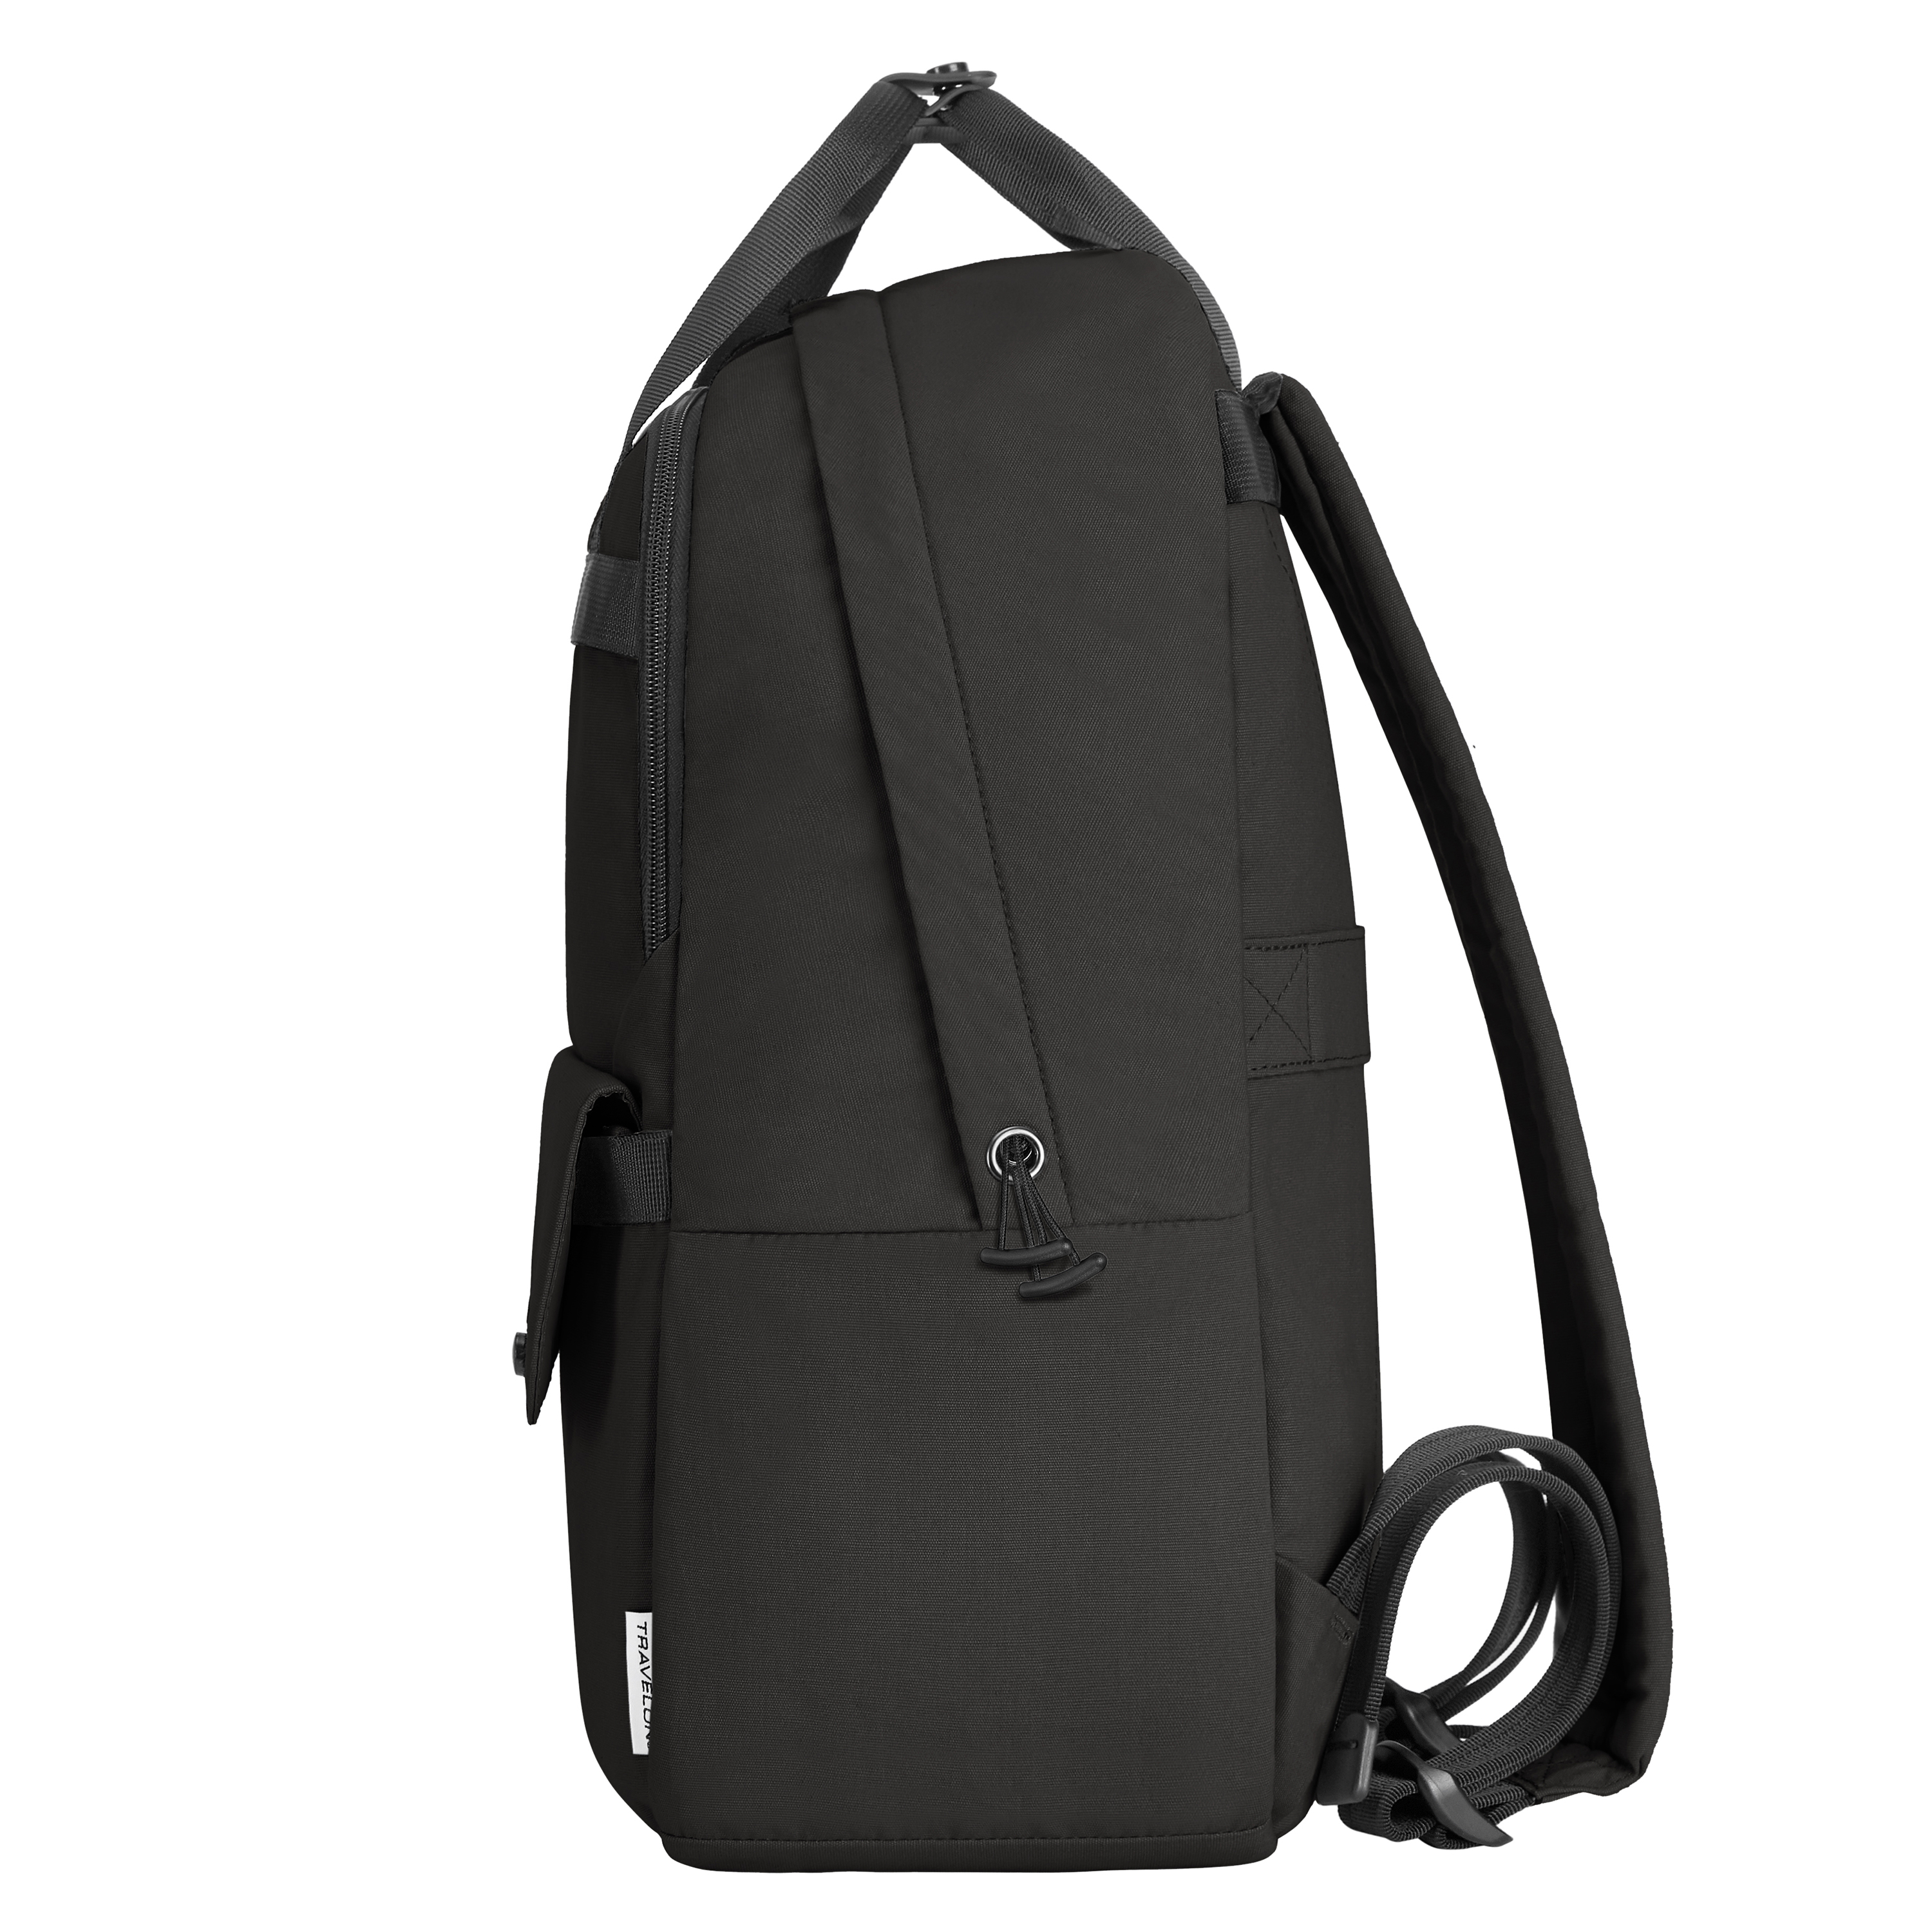 Travelon: Origin - Anti-Theft - Large Backpack - SILVADUR TREATED - Black - image 3 of 11